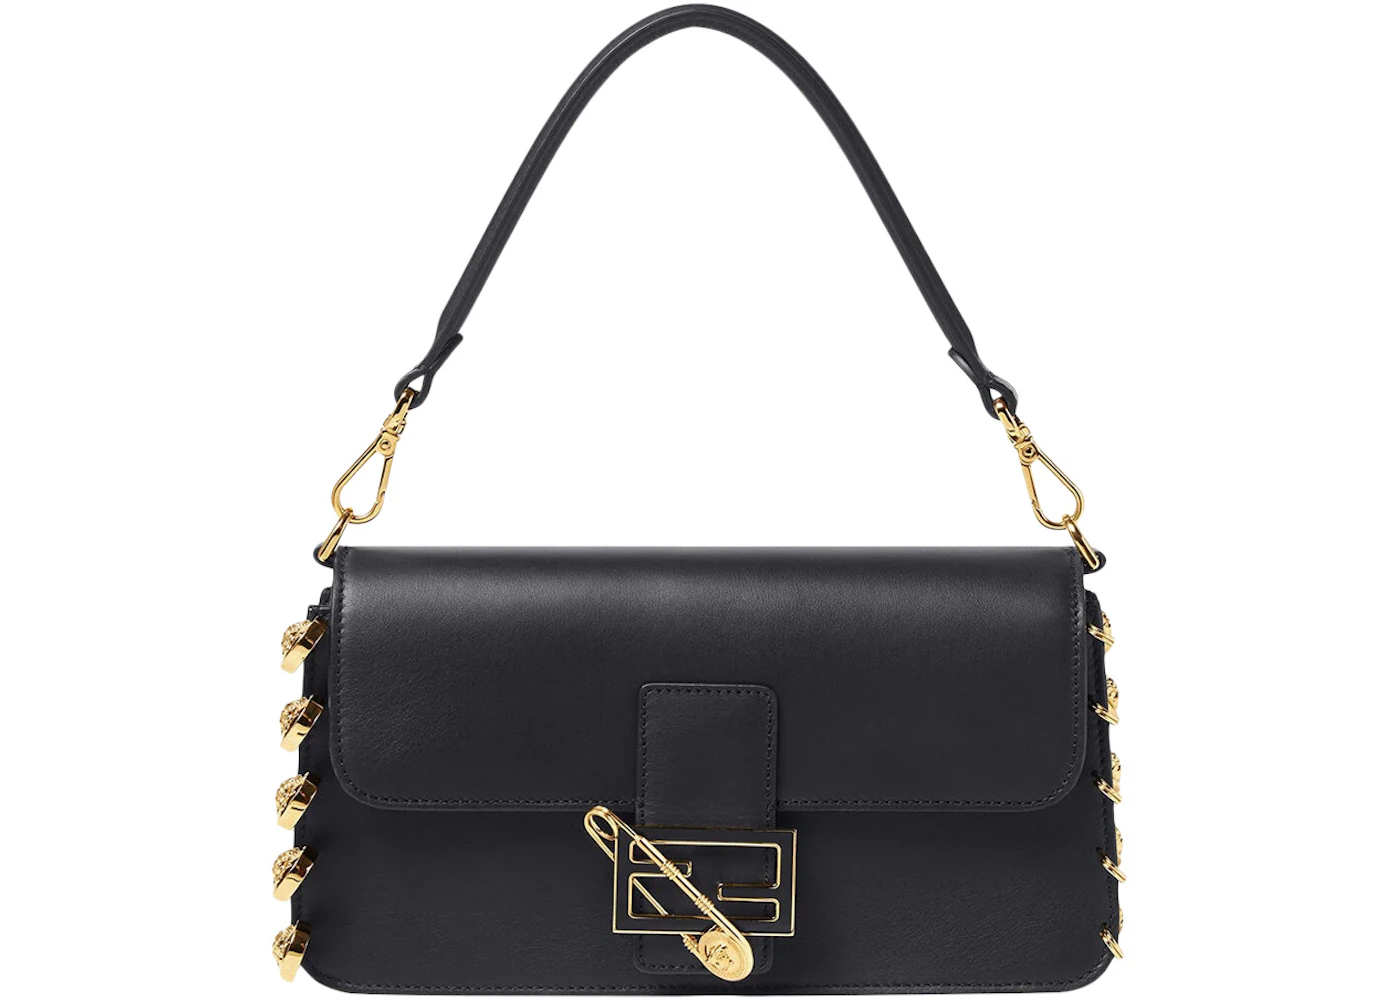 Fendi Fendace Baguette Shoulder Bag Black in Leather with Gold-tone - US